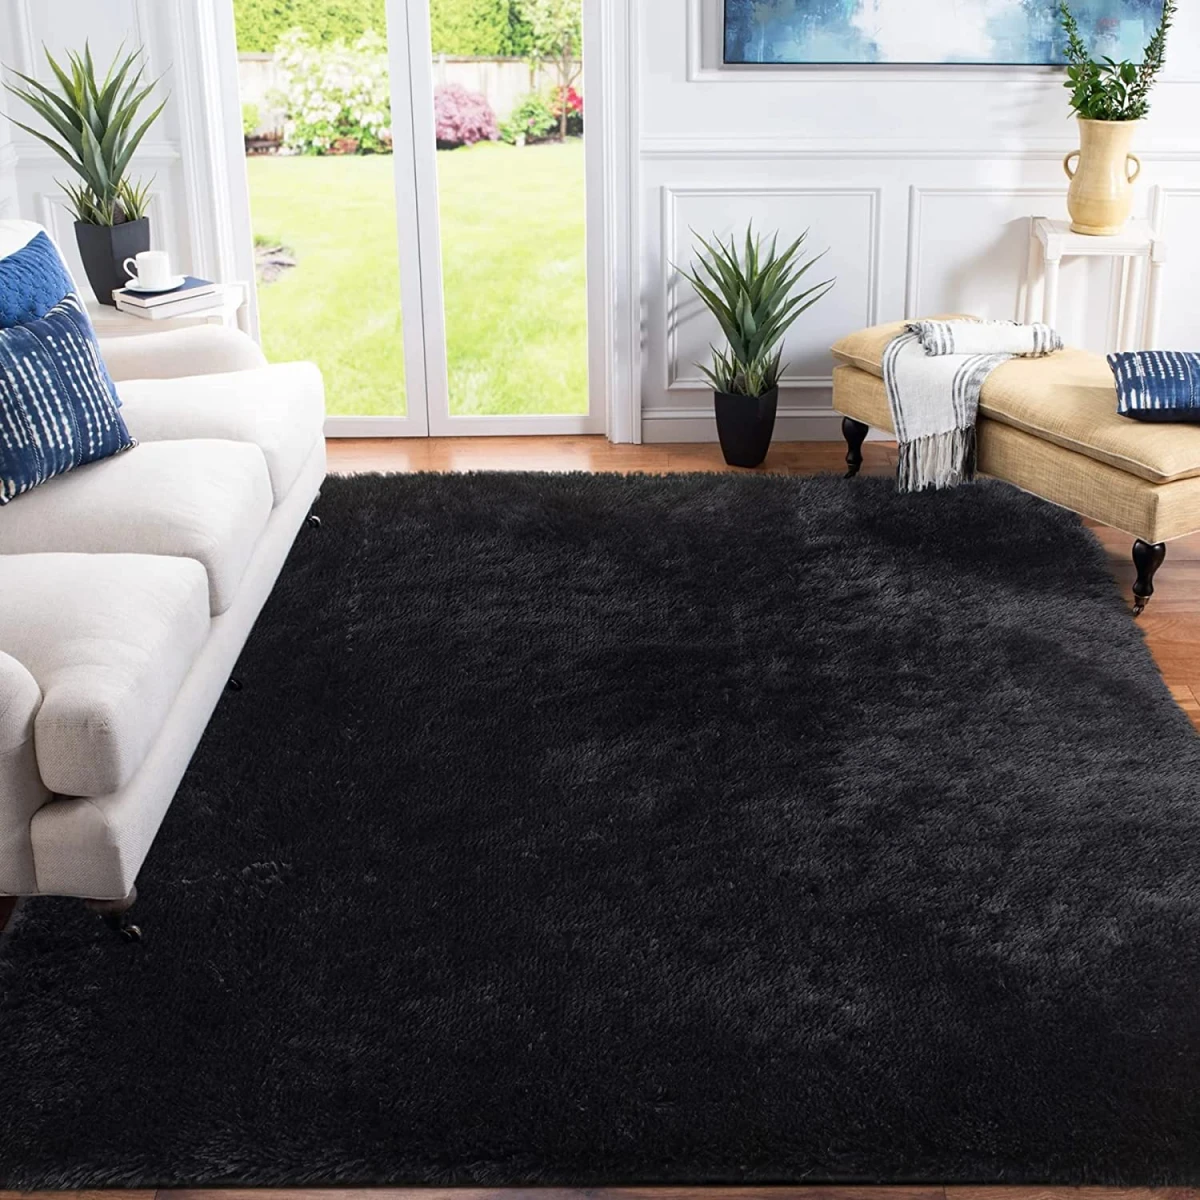 large black rug in living room